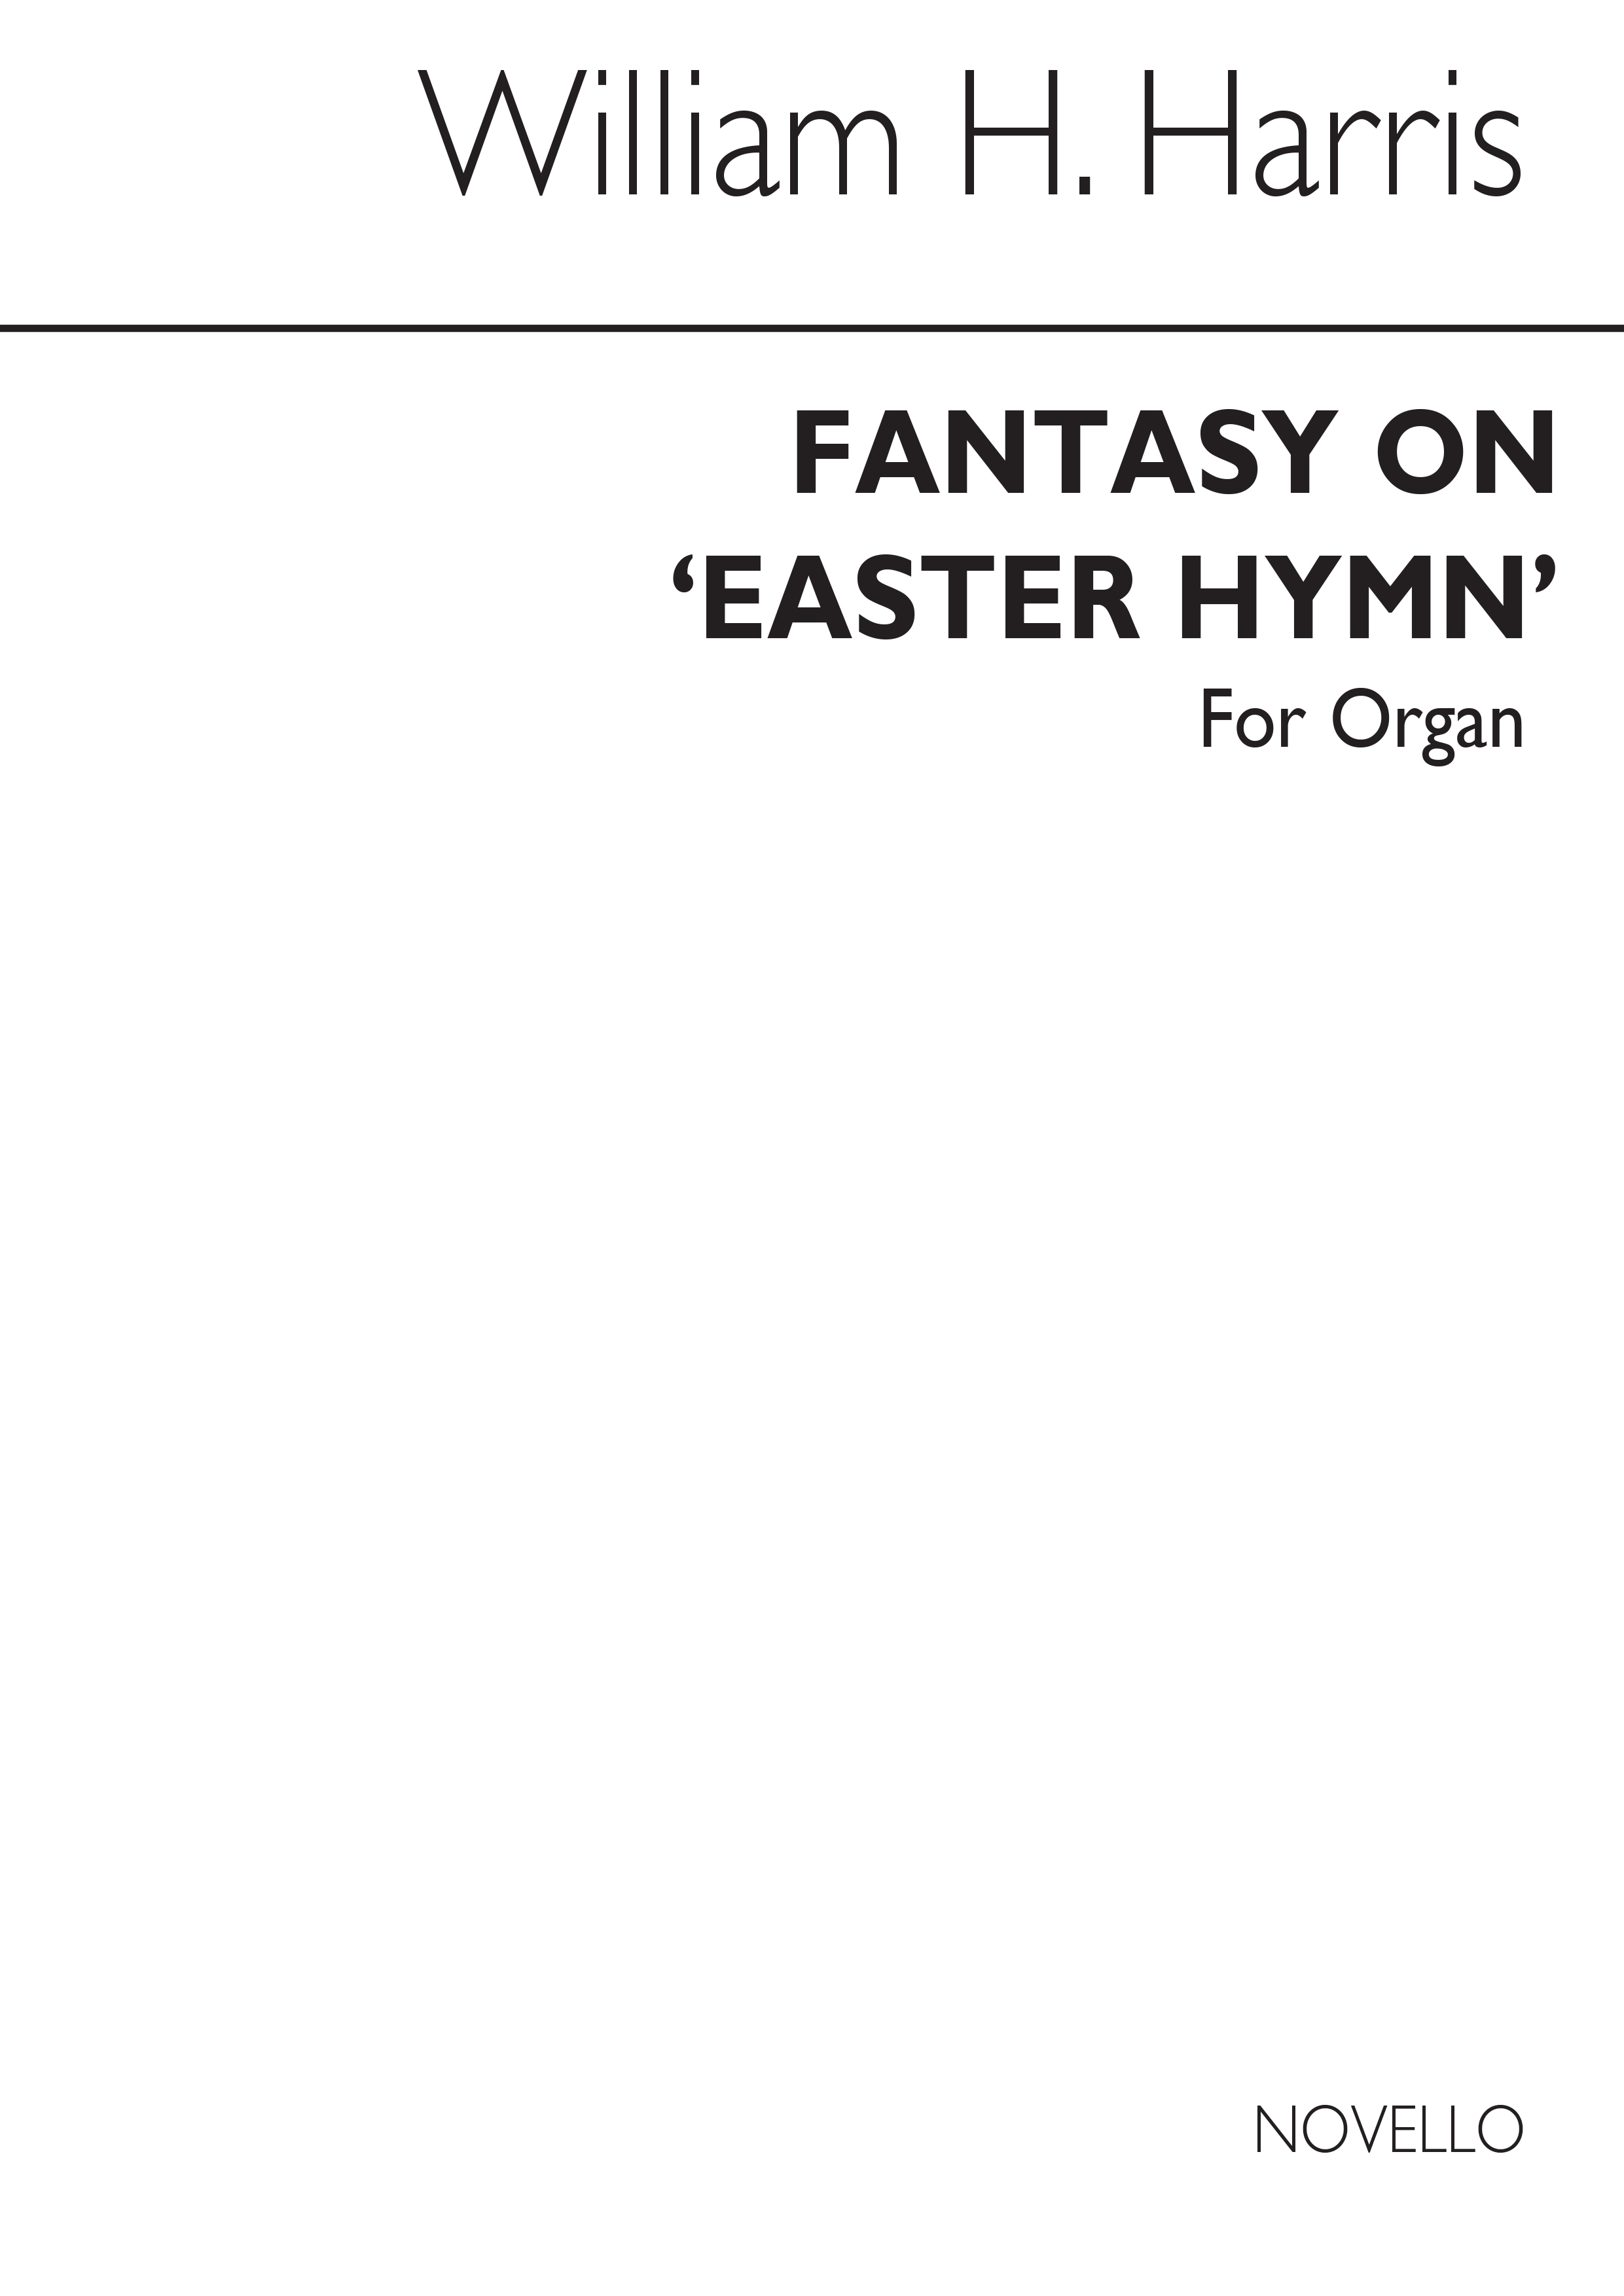 William H. Harris: Fantasy On Easter Hymn for Organ